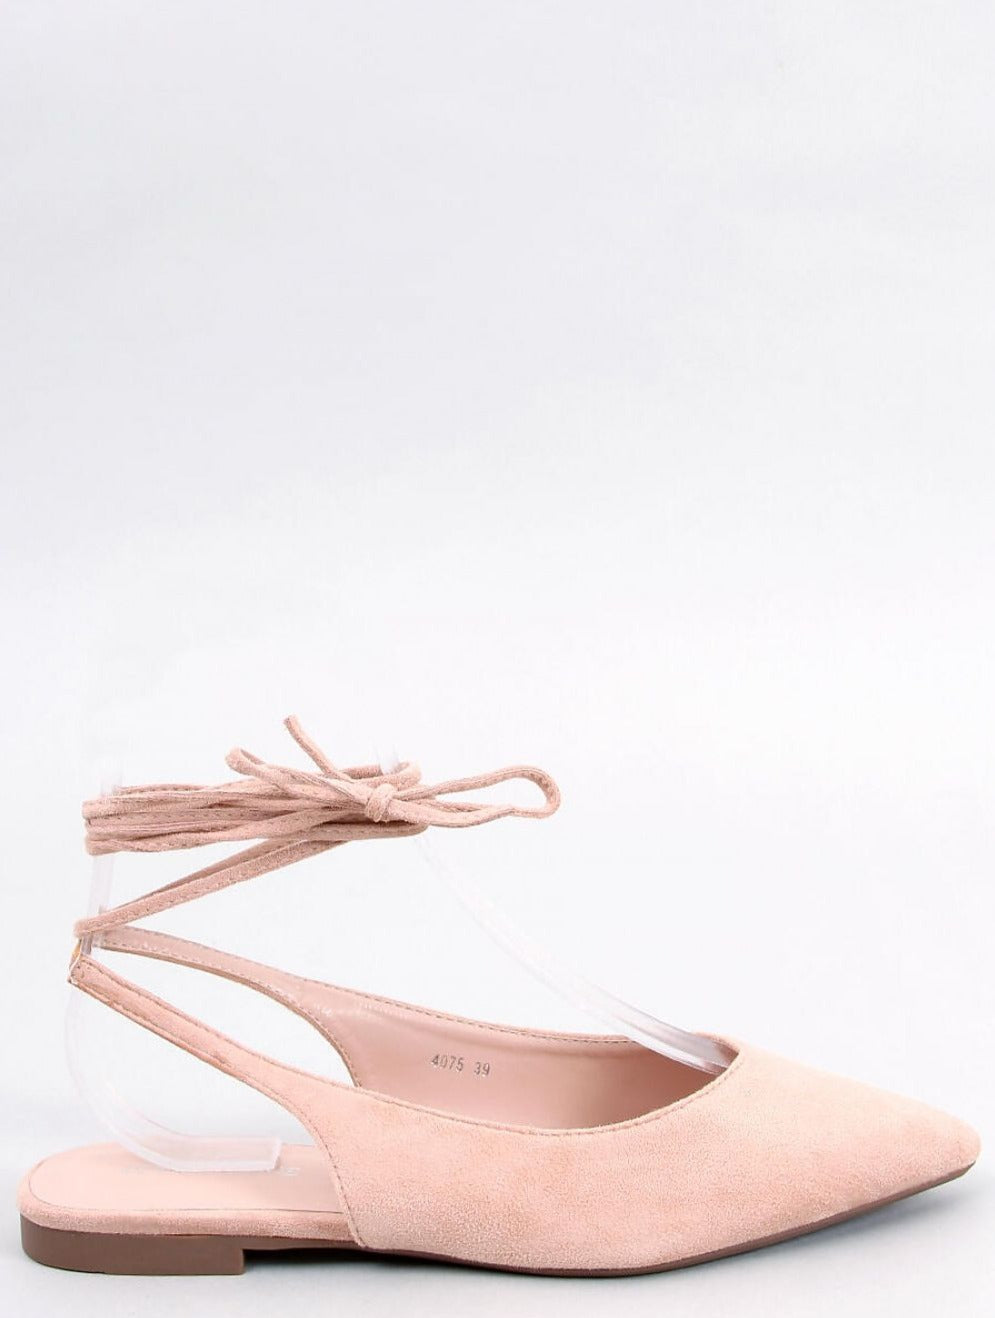 TEEK - Blush Pink Suede Ballet Ankle Tie Flats SHOES TEEK MH 5.5  